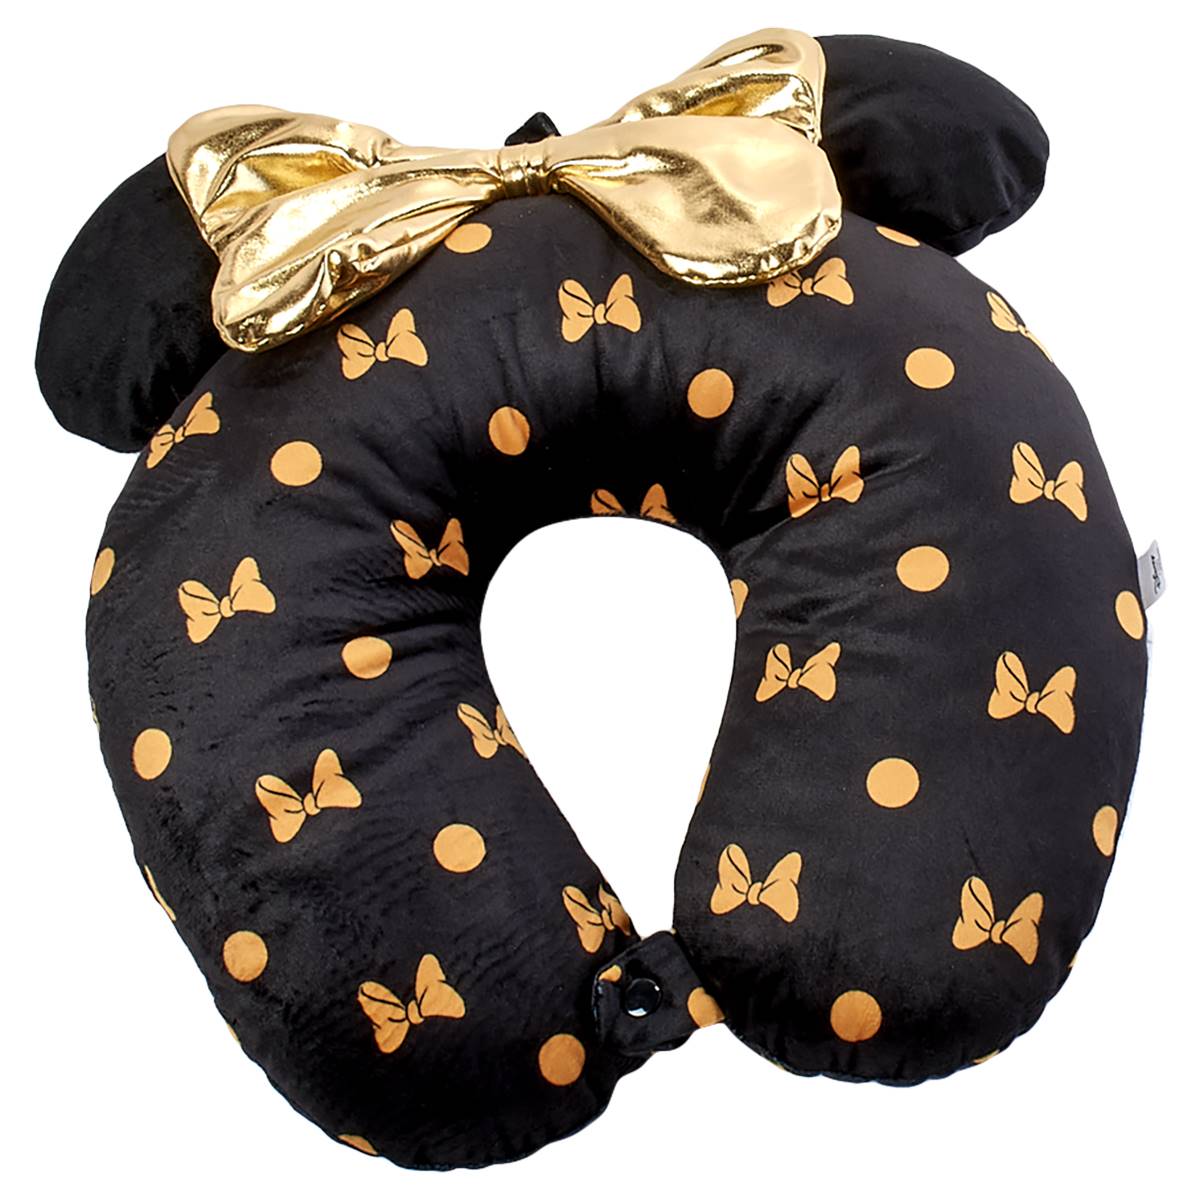 Minnie Mouse Neck Pillow - Black/Yellow